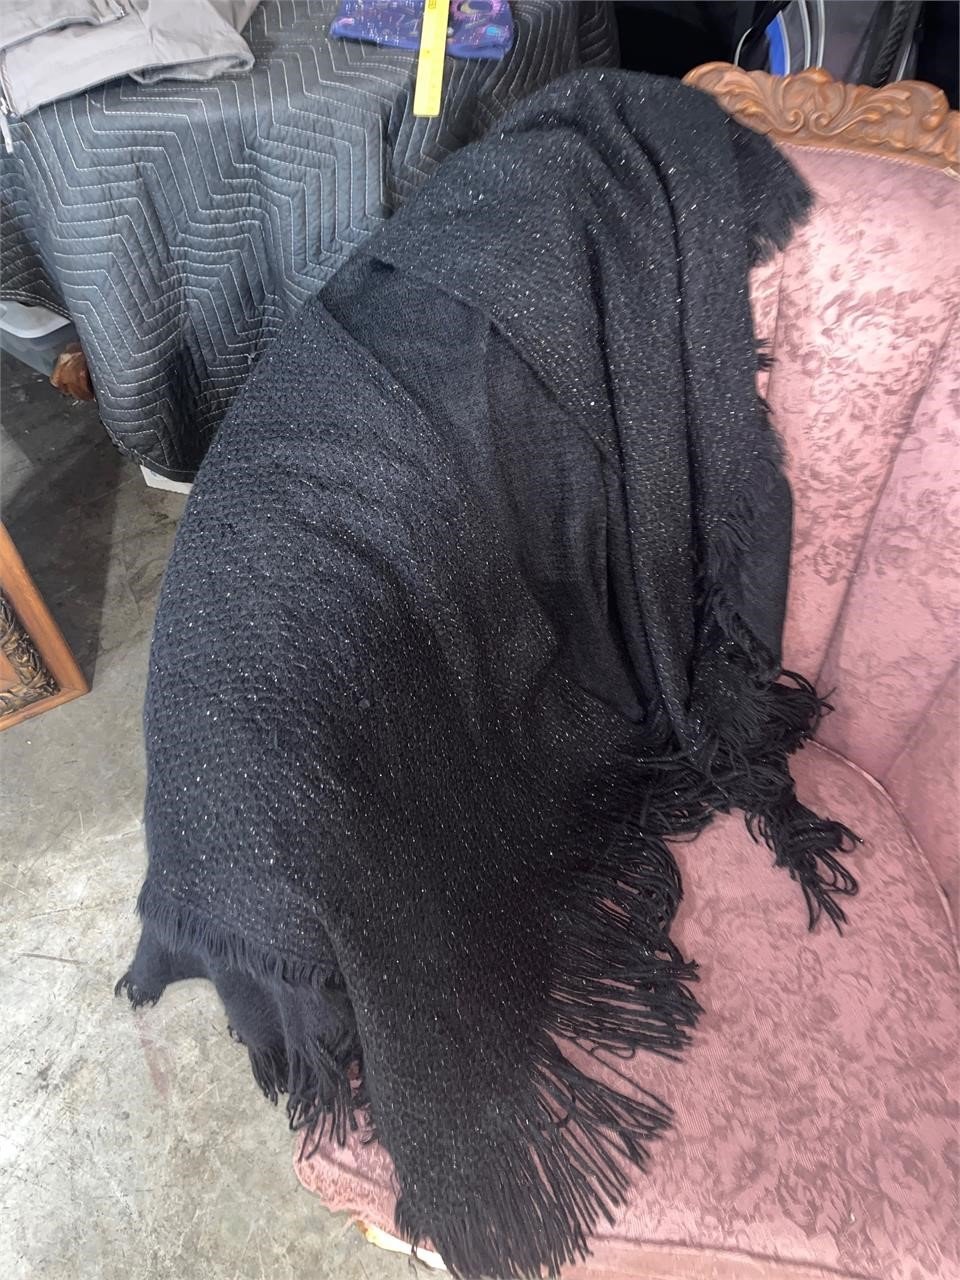 sparkly black shawl - super soft